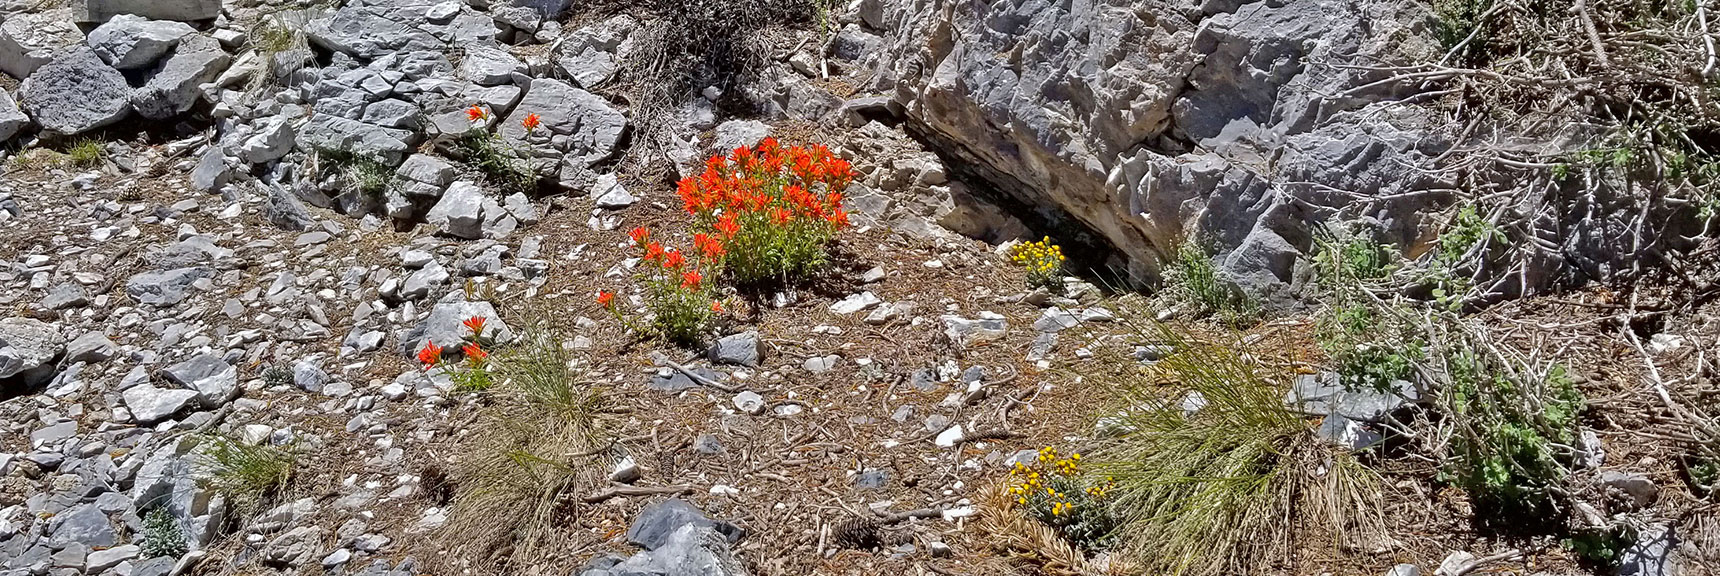 More Spring Flowers Near Final Summit Approach (2nd Week in June, Spring Just Beginning Here) | Macks Peak | Mt Charleston Wilderness | Spring Mountains, Nevada